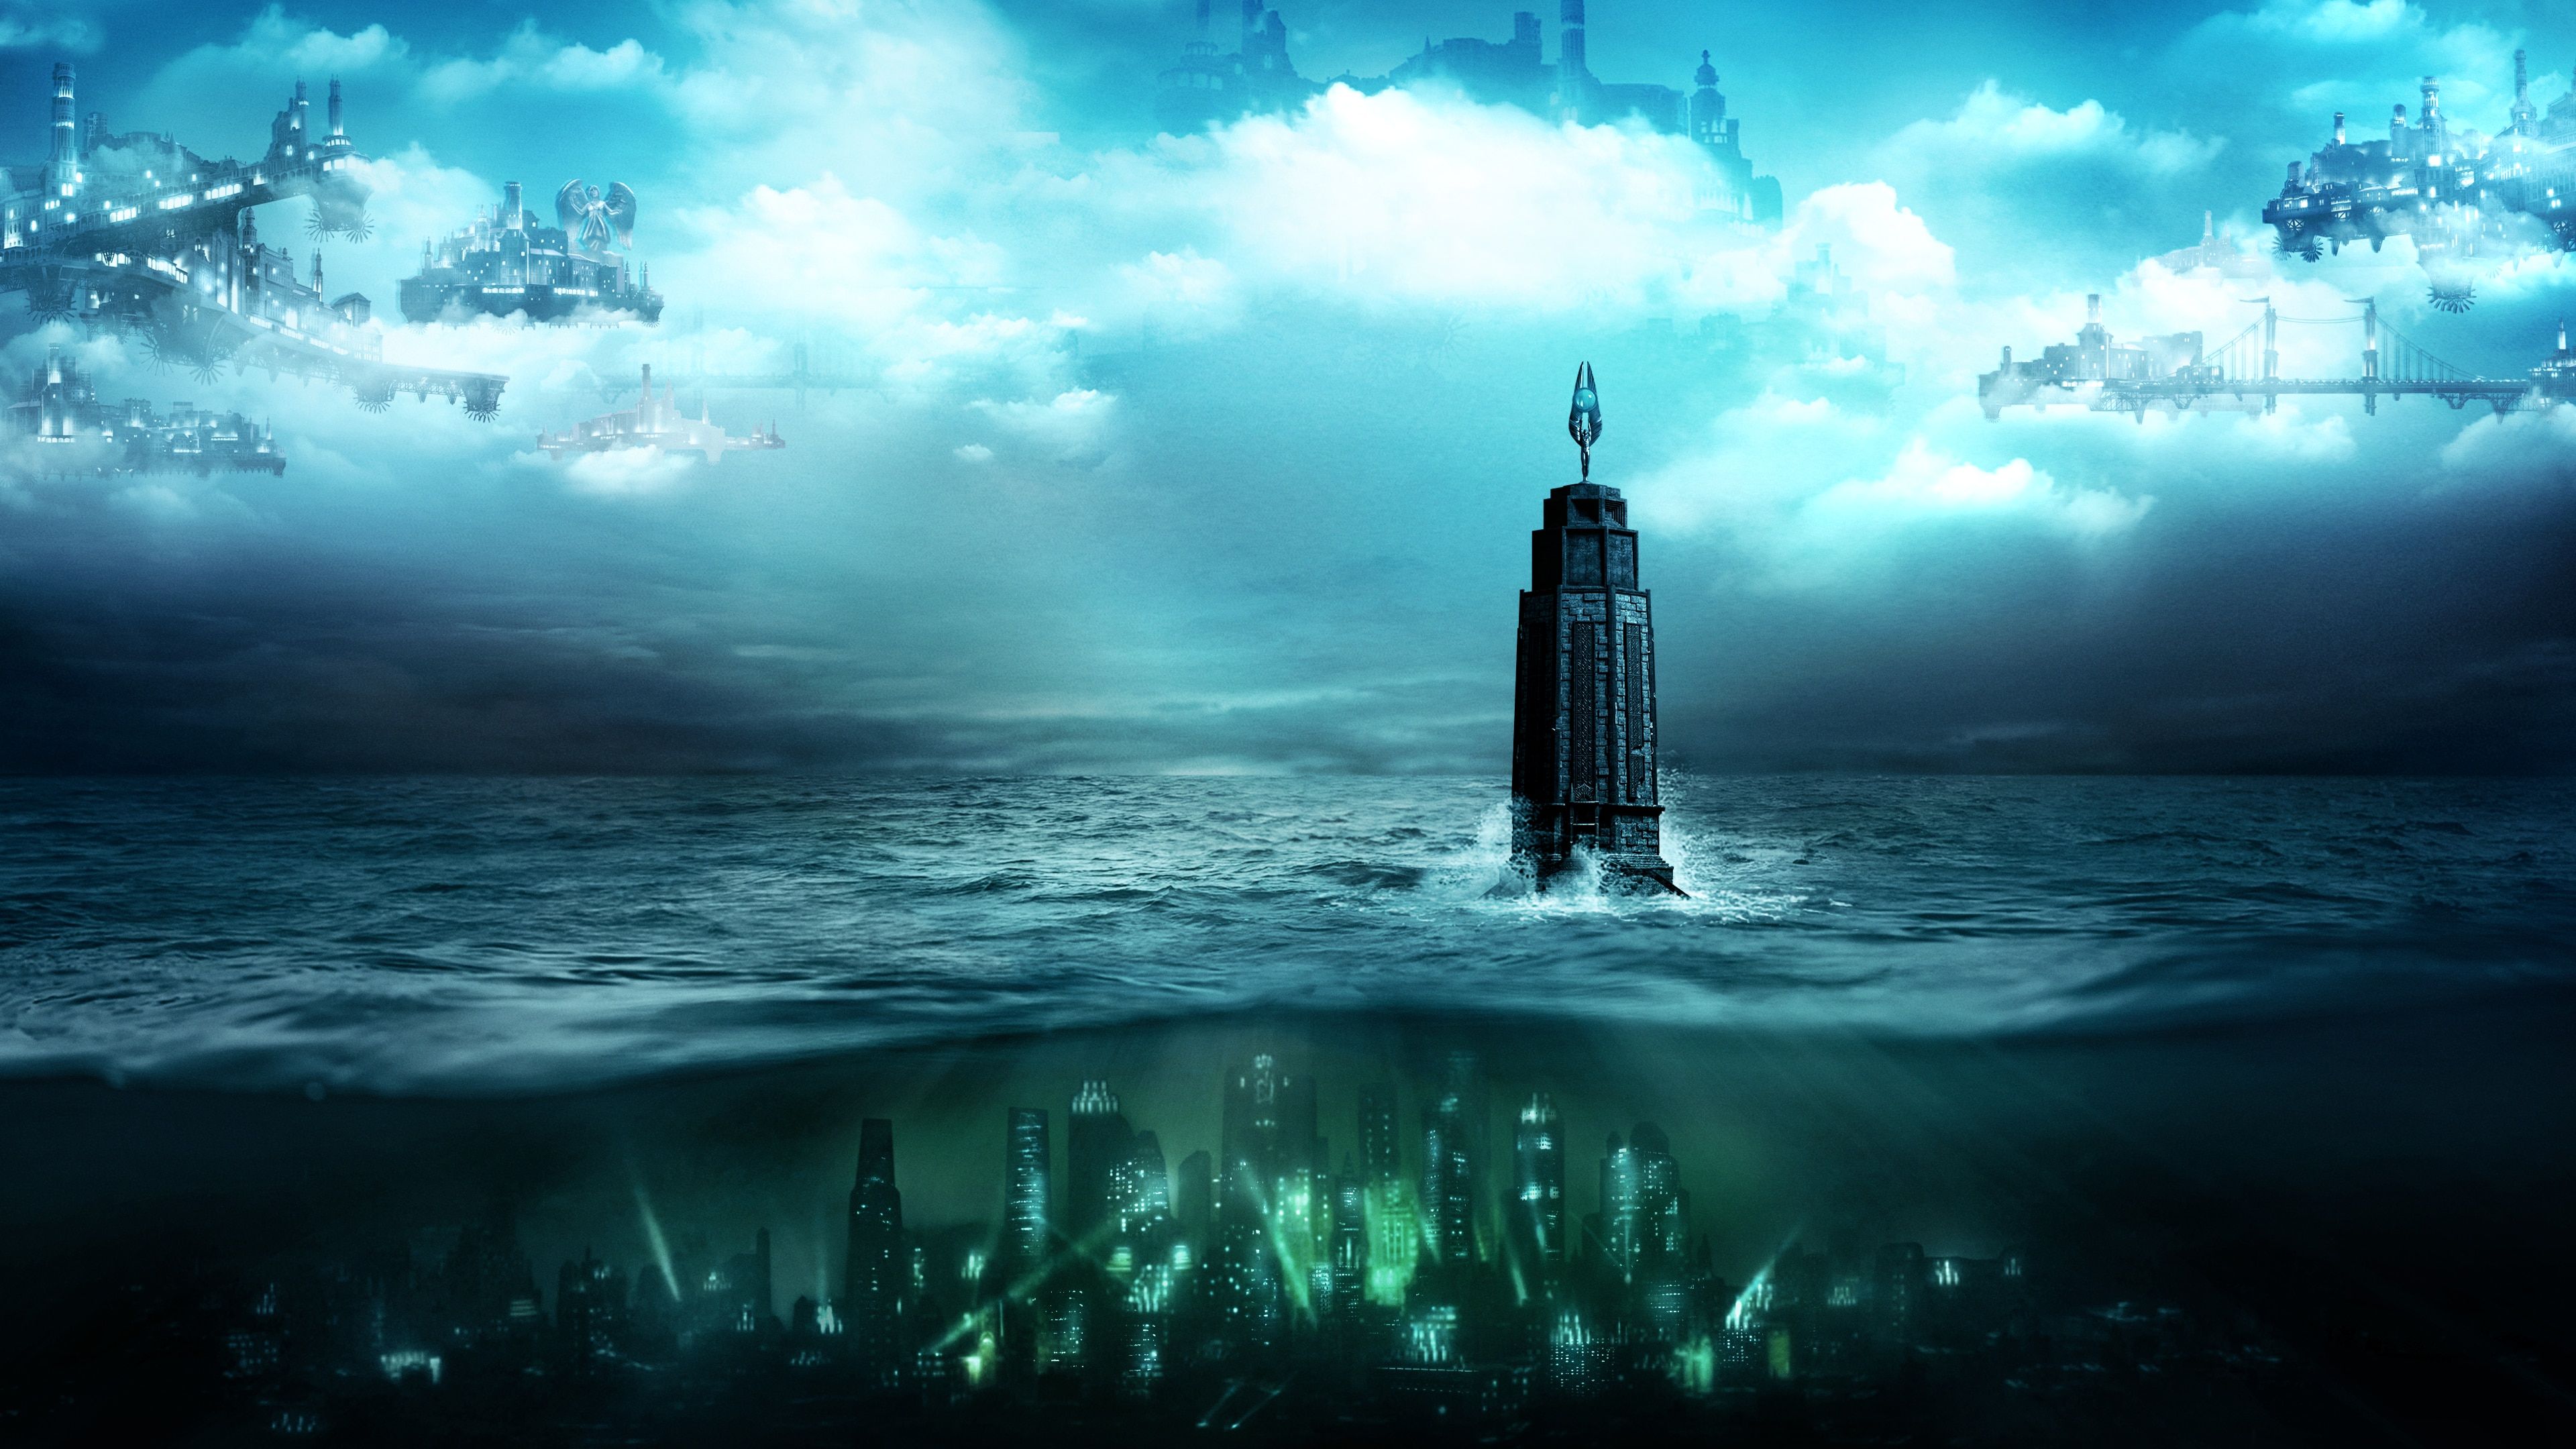 BioShock Remastered cover image